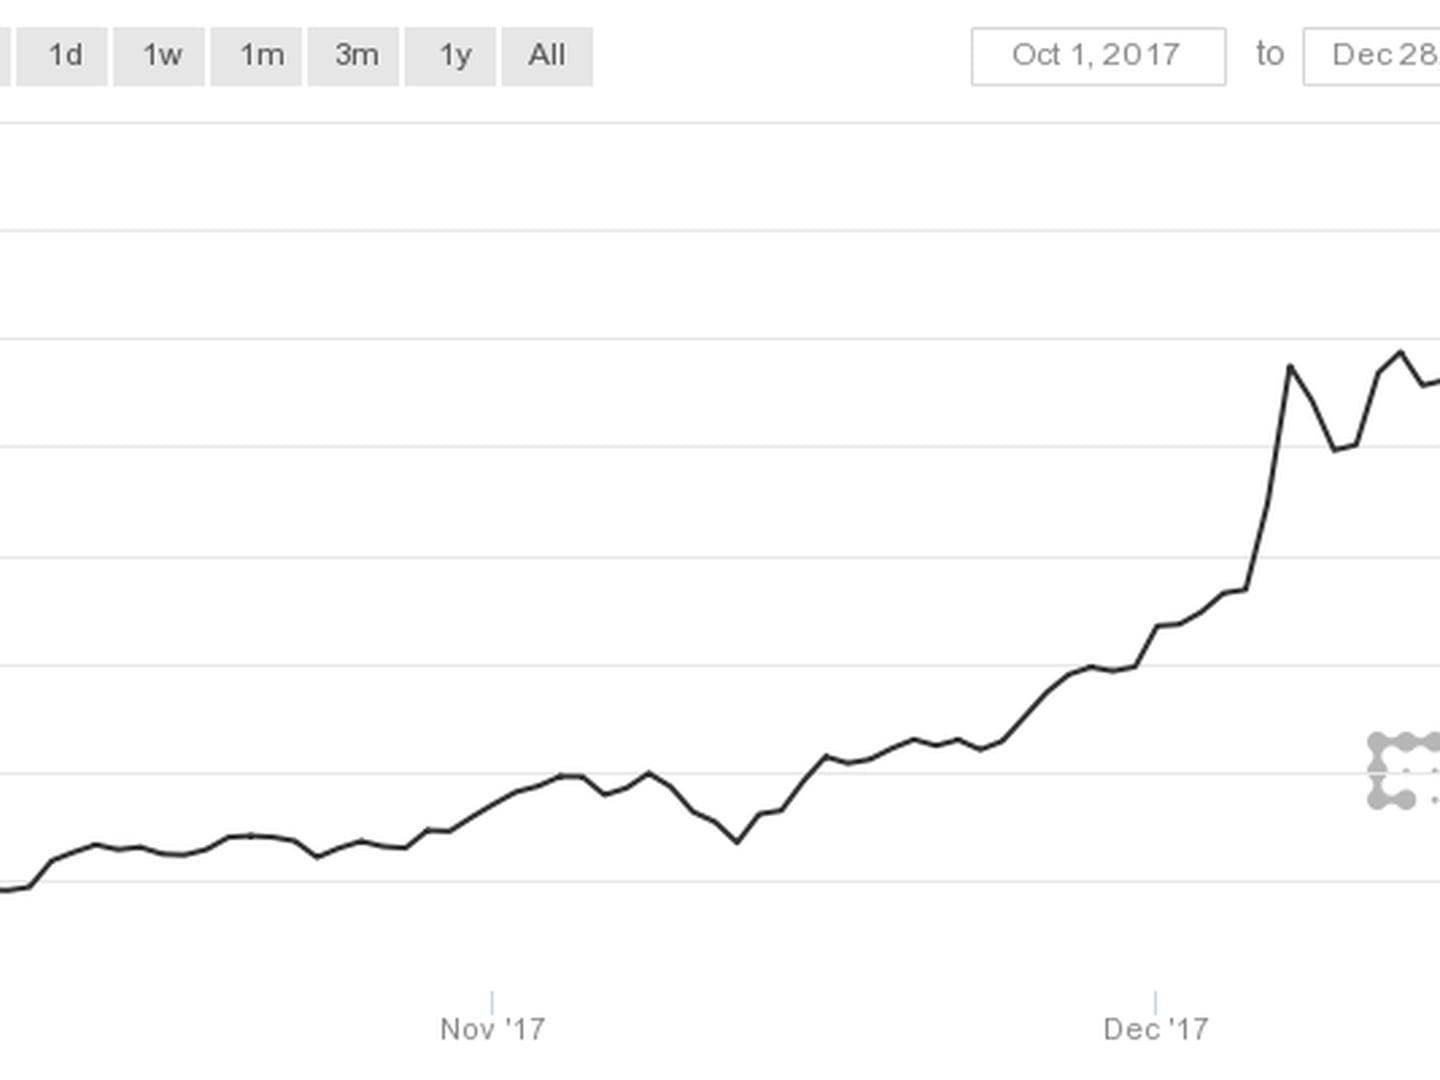 3 years ago bitcoin price